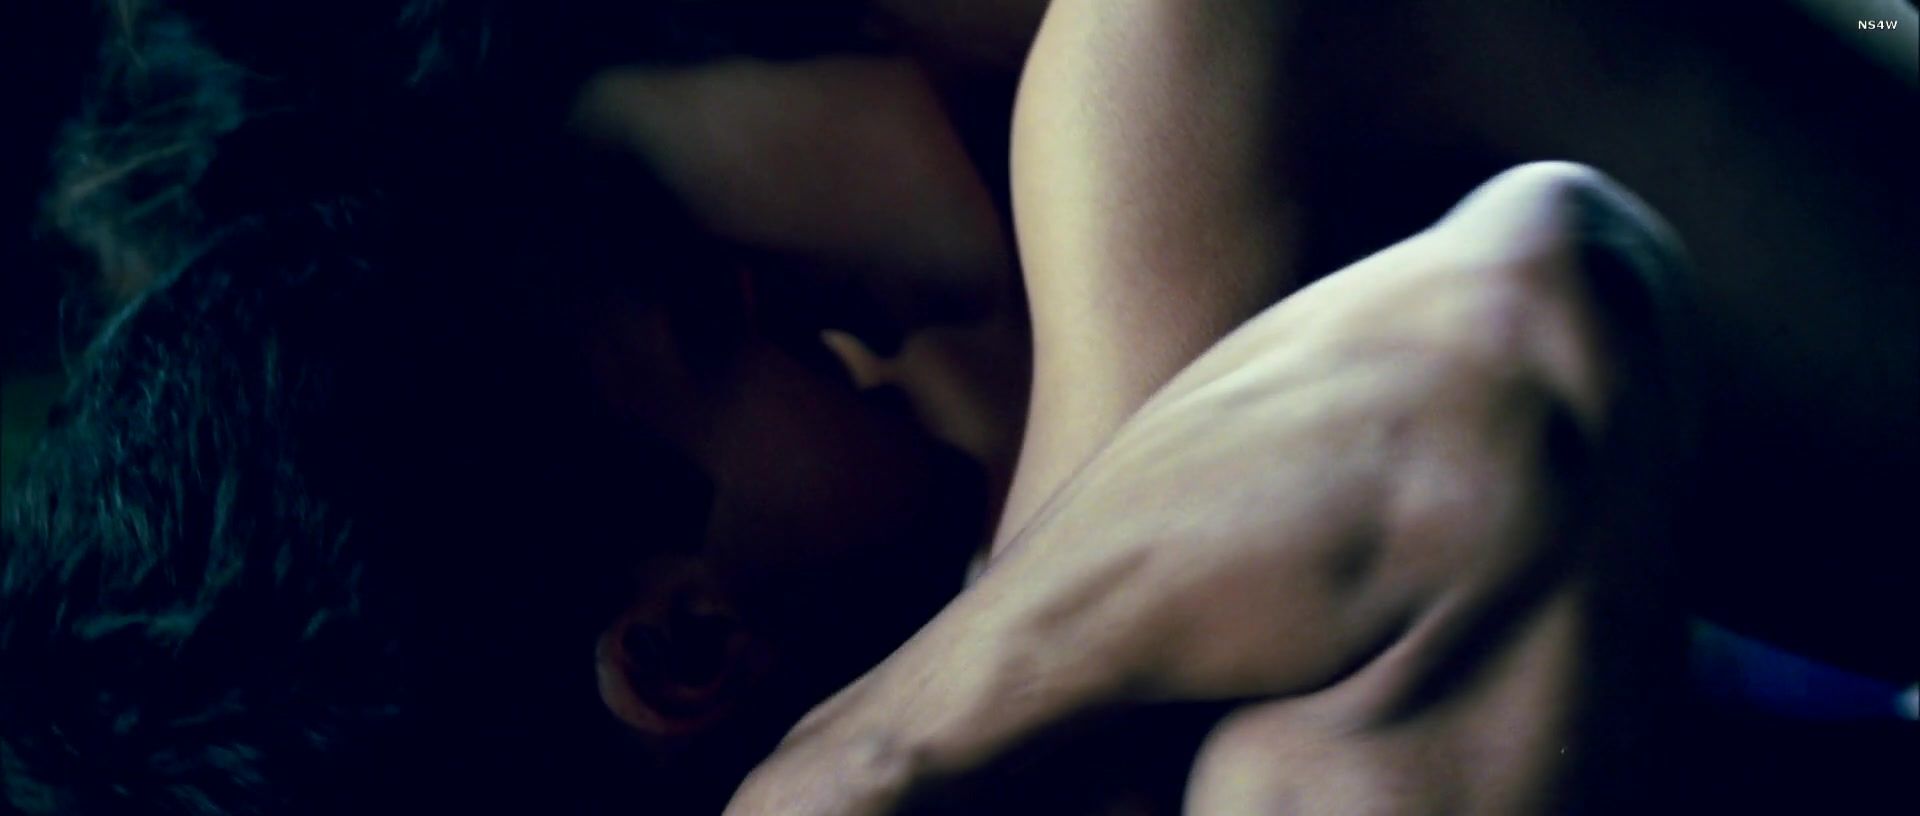 FullRips Celebirty sex scene | Clara Lago - Tengo ganas de ti (2012) Lesbian threesome